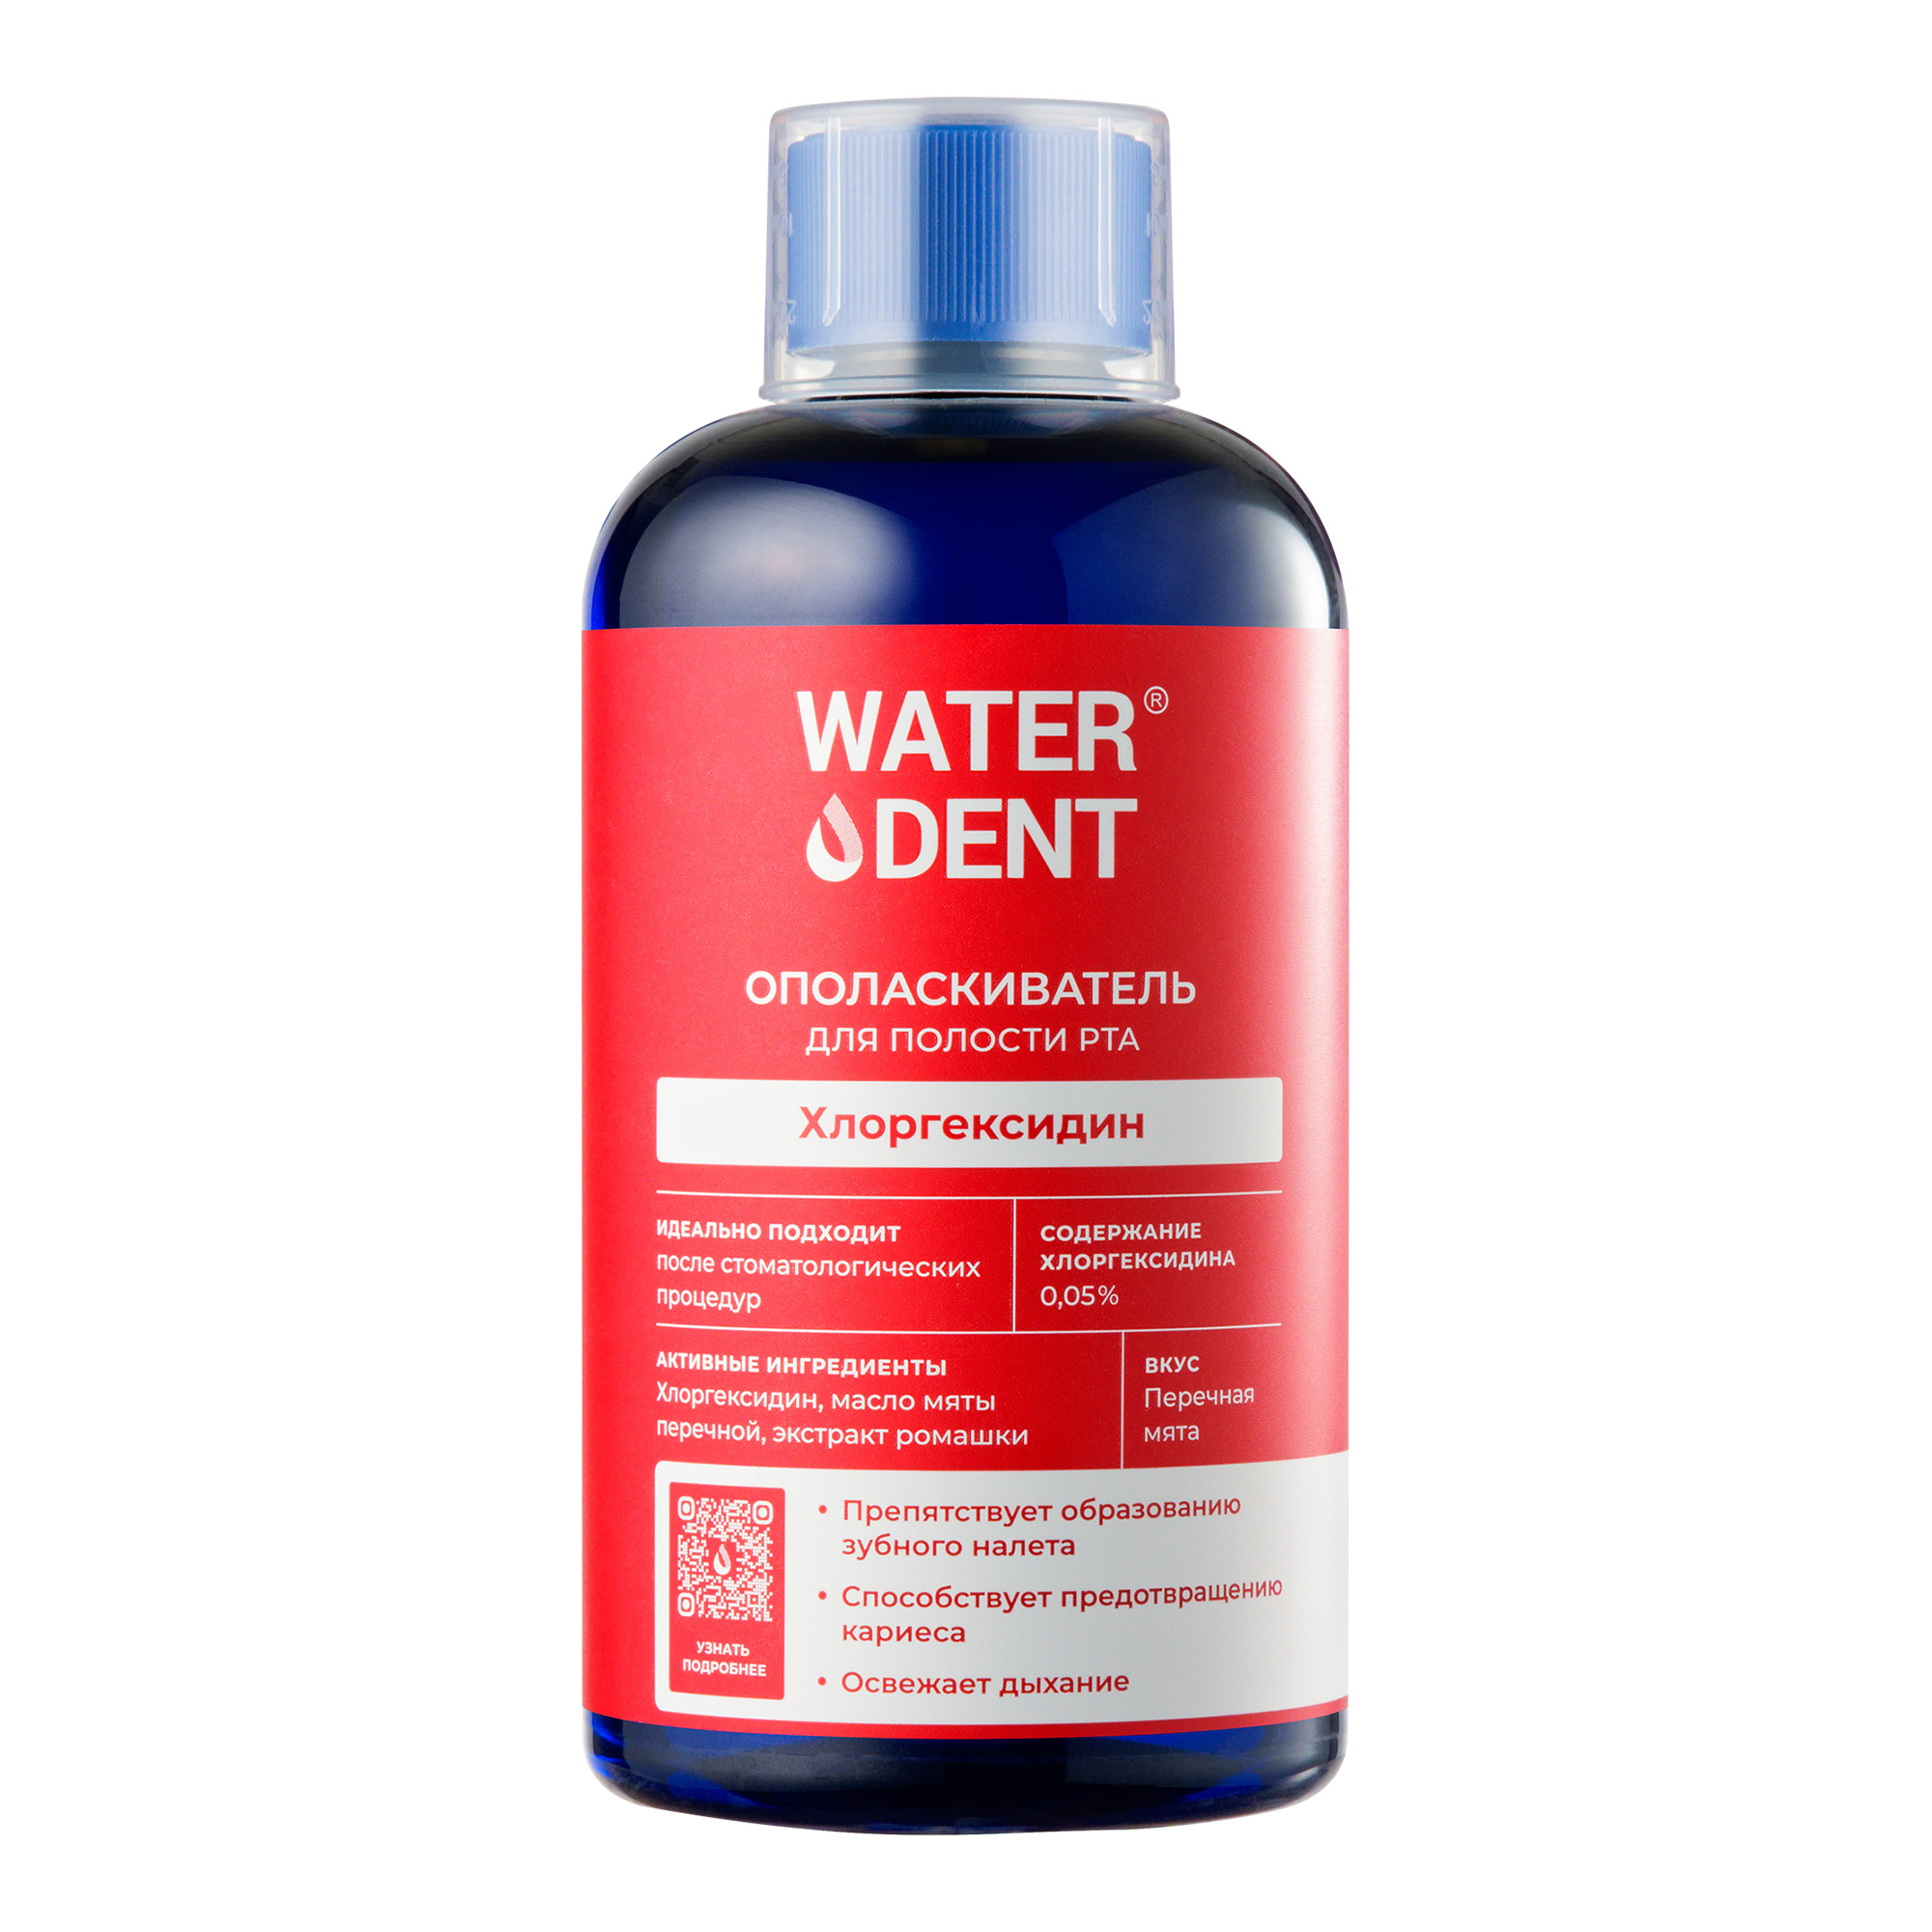 Waterdent, ополаскиватель для полости рта Хлоргексидин со вкусом мяты, 500 мл global white зубная нить со вкусом мяты